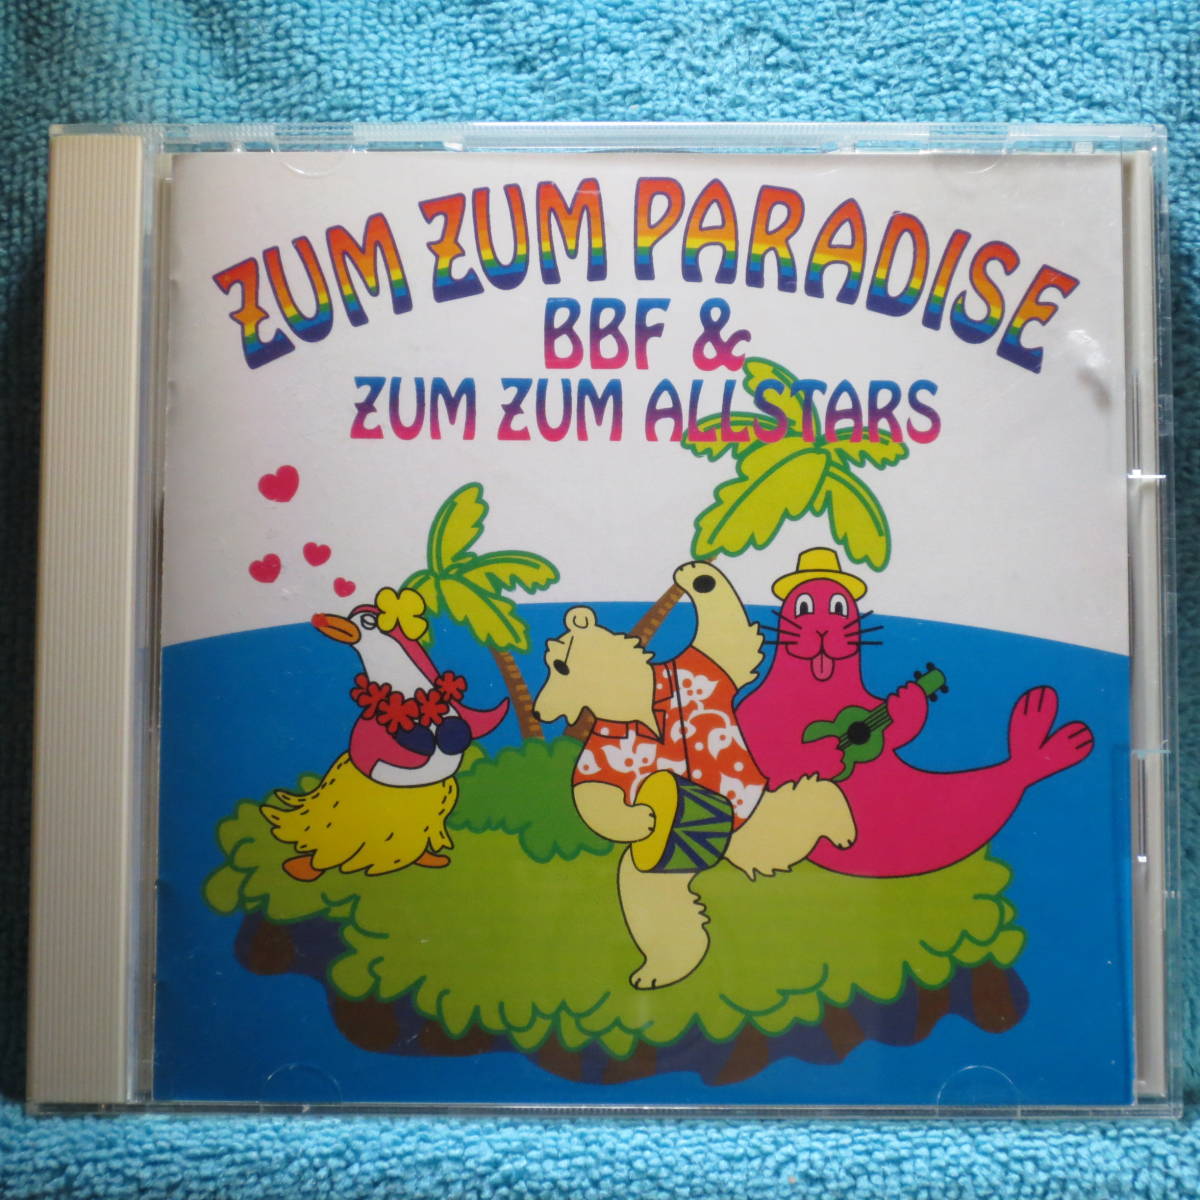 SALENEW大人気! 日本製 CD BBFZUM ZUM ALLSTARS PARADISE ファンキー末吉 バーベQ和佐田 bigportal.ba bigportal.ba